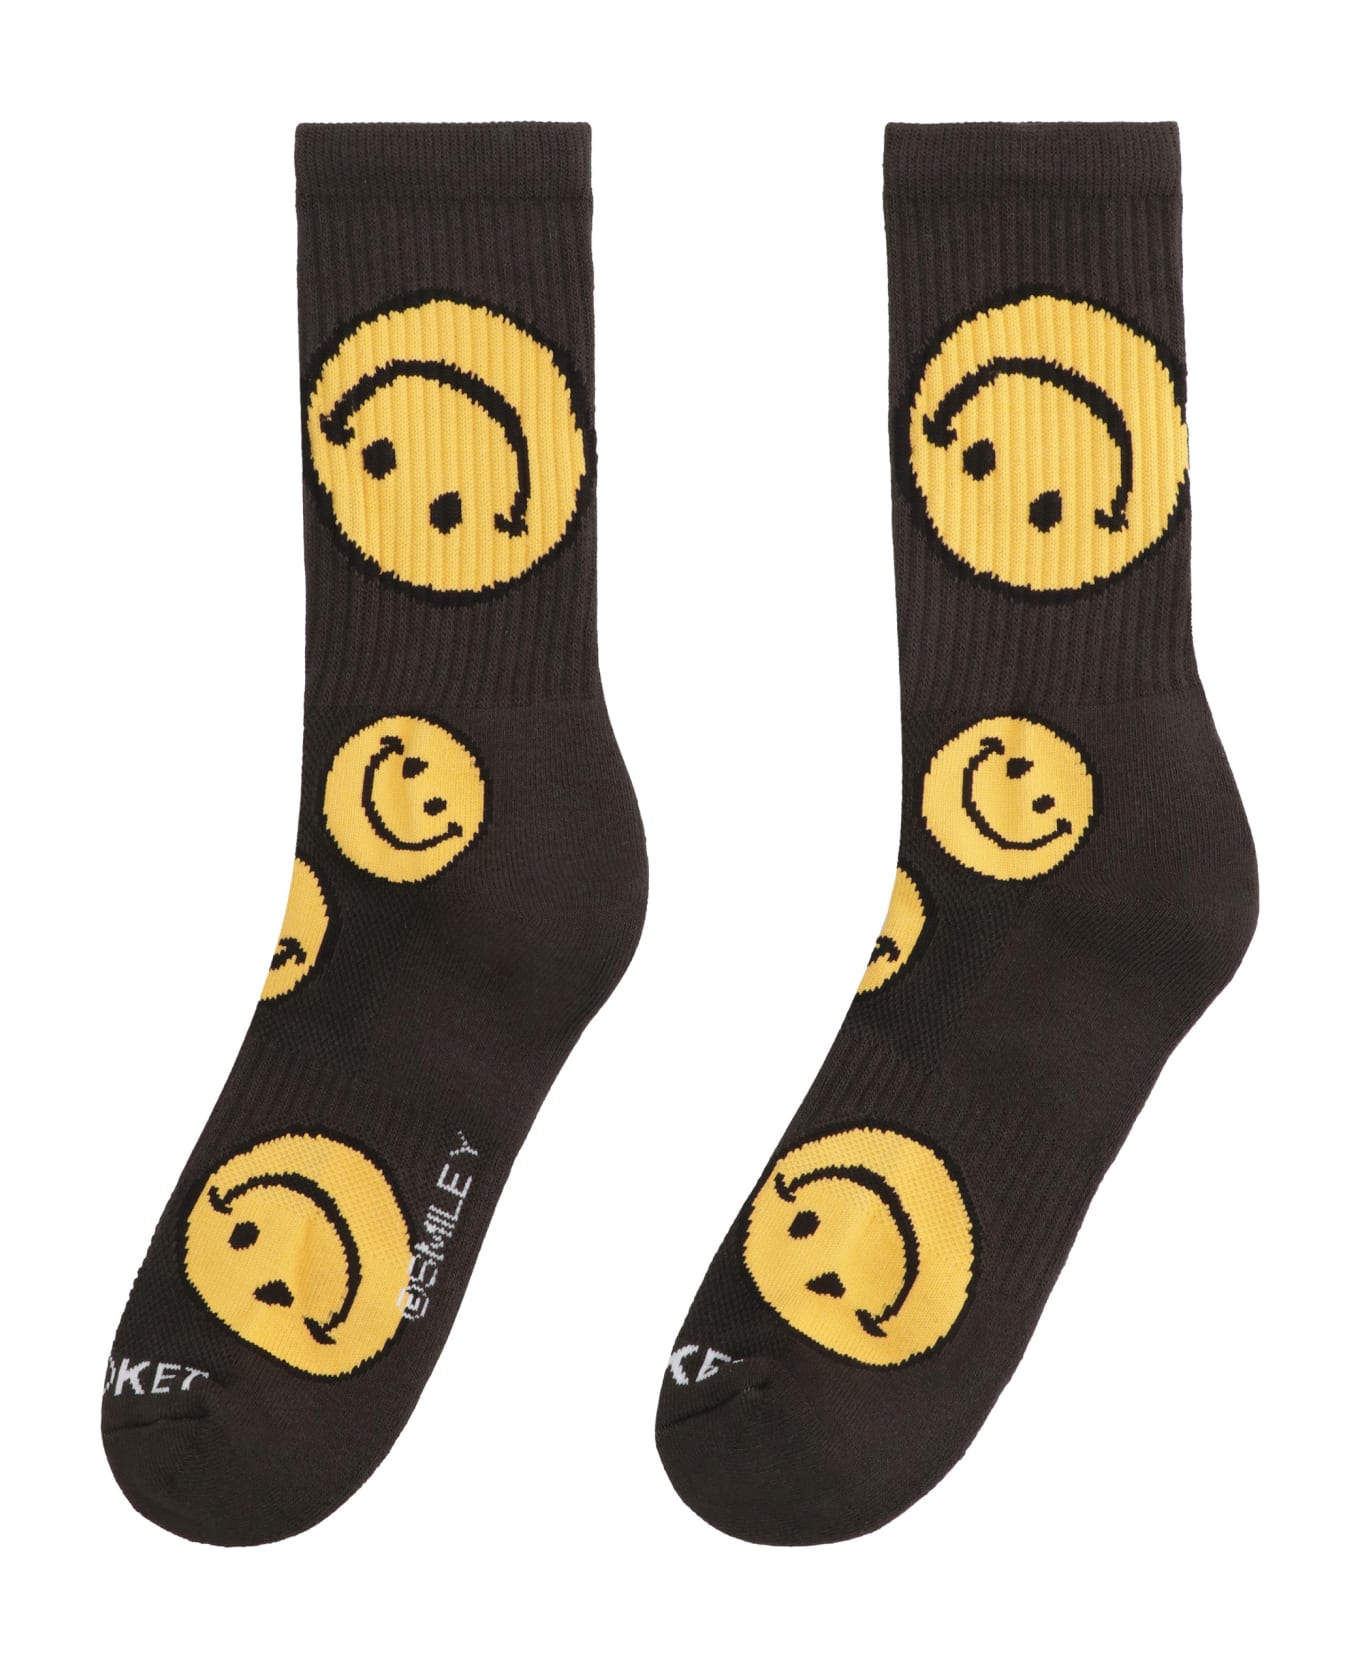 Market X Smiley - Smiley Vintage Cotton Socks 靴下